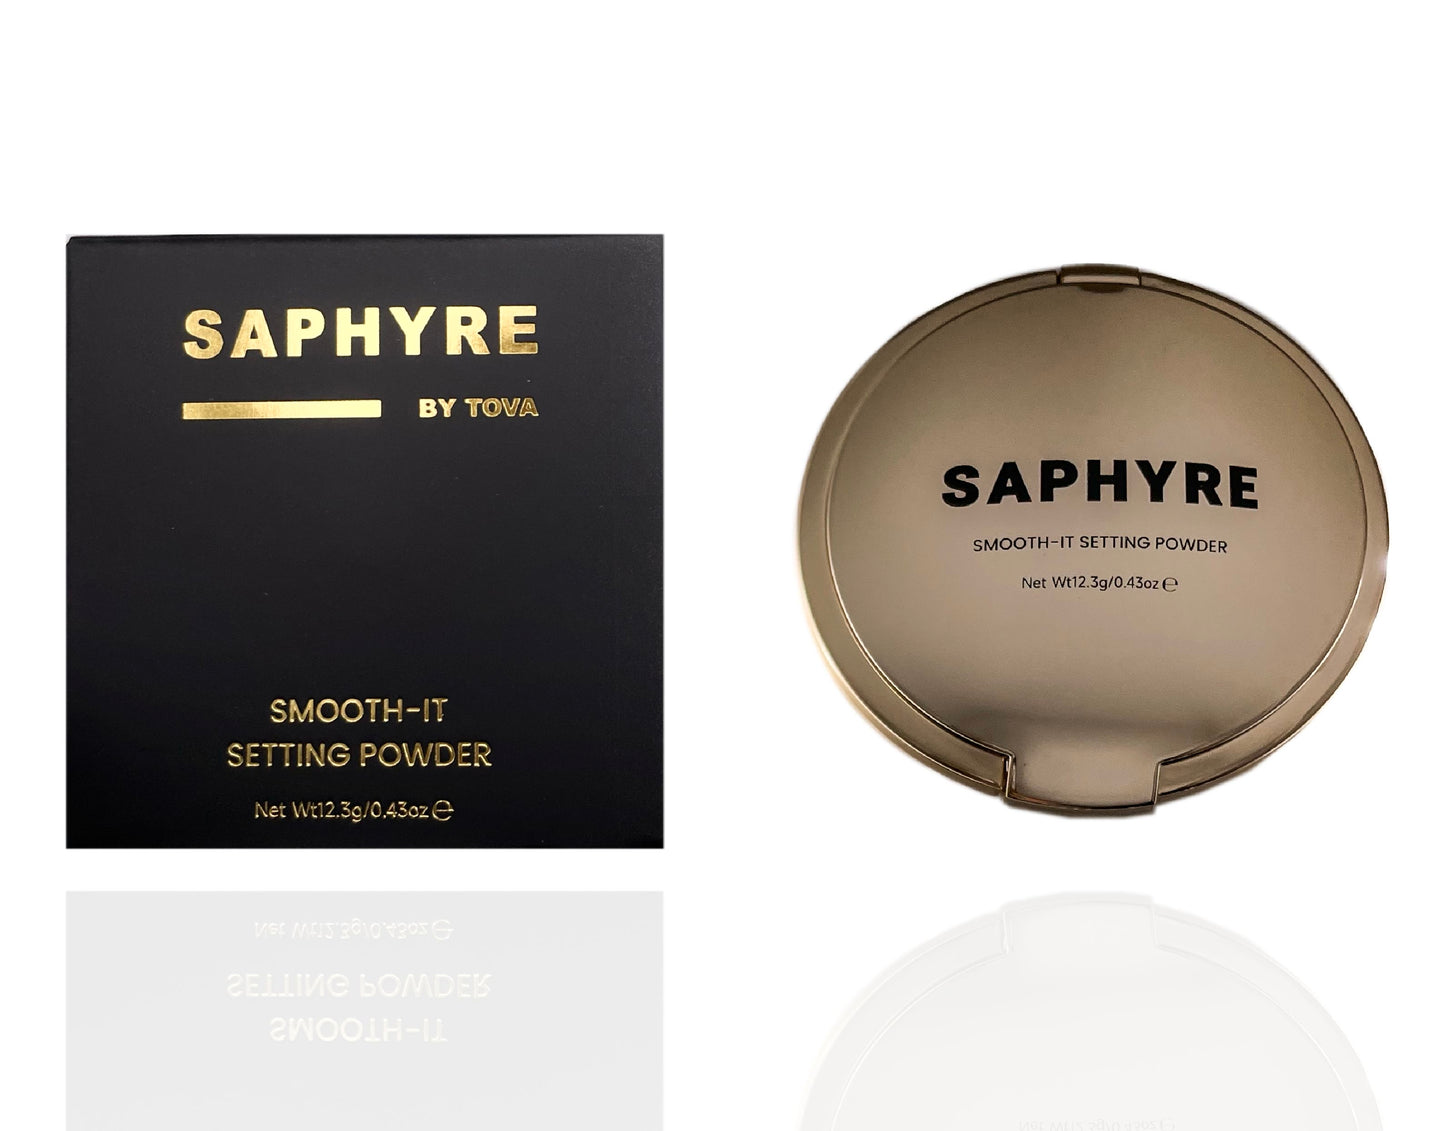 Saphyre by Tova Smooth-it Setting Powder KFP